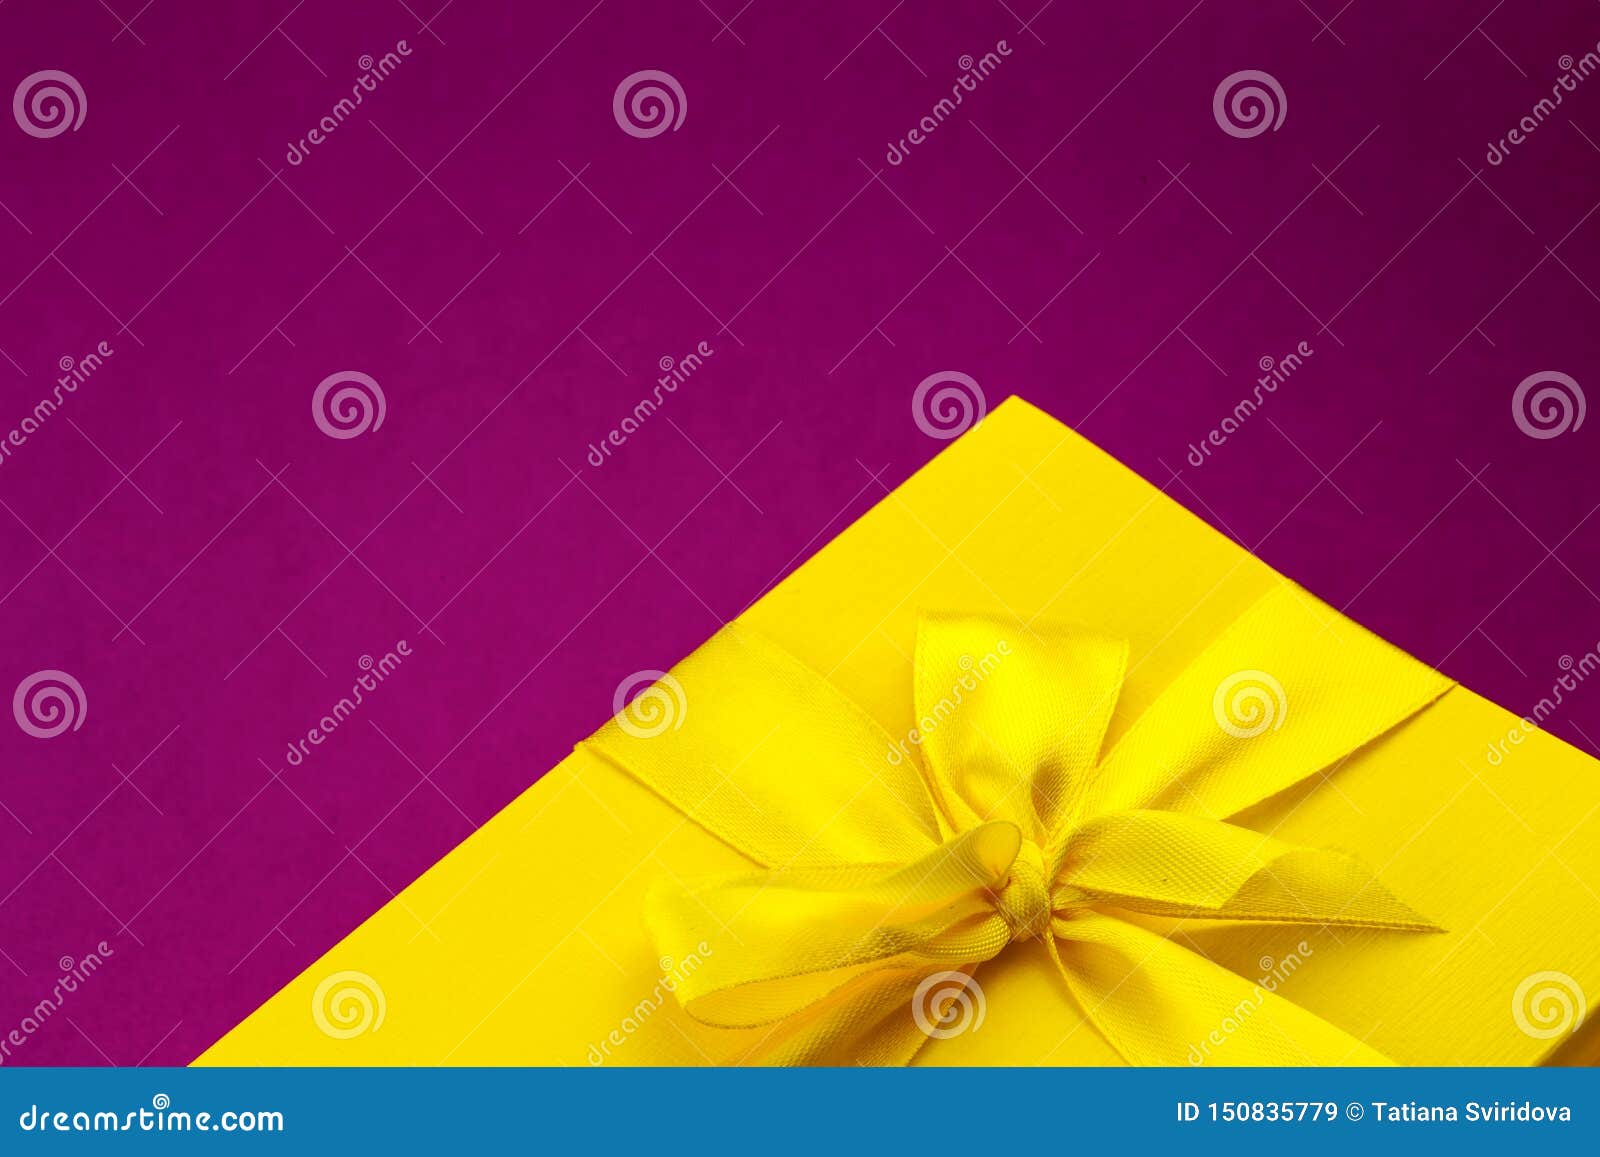 Bright Yellow Giftbox On Dark Pink Background Stock Image